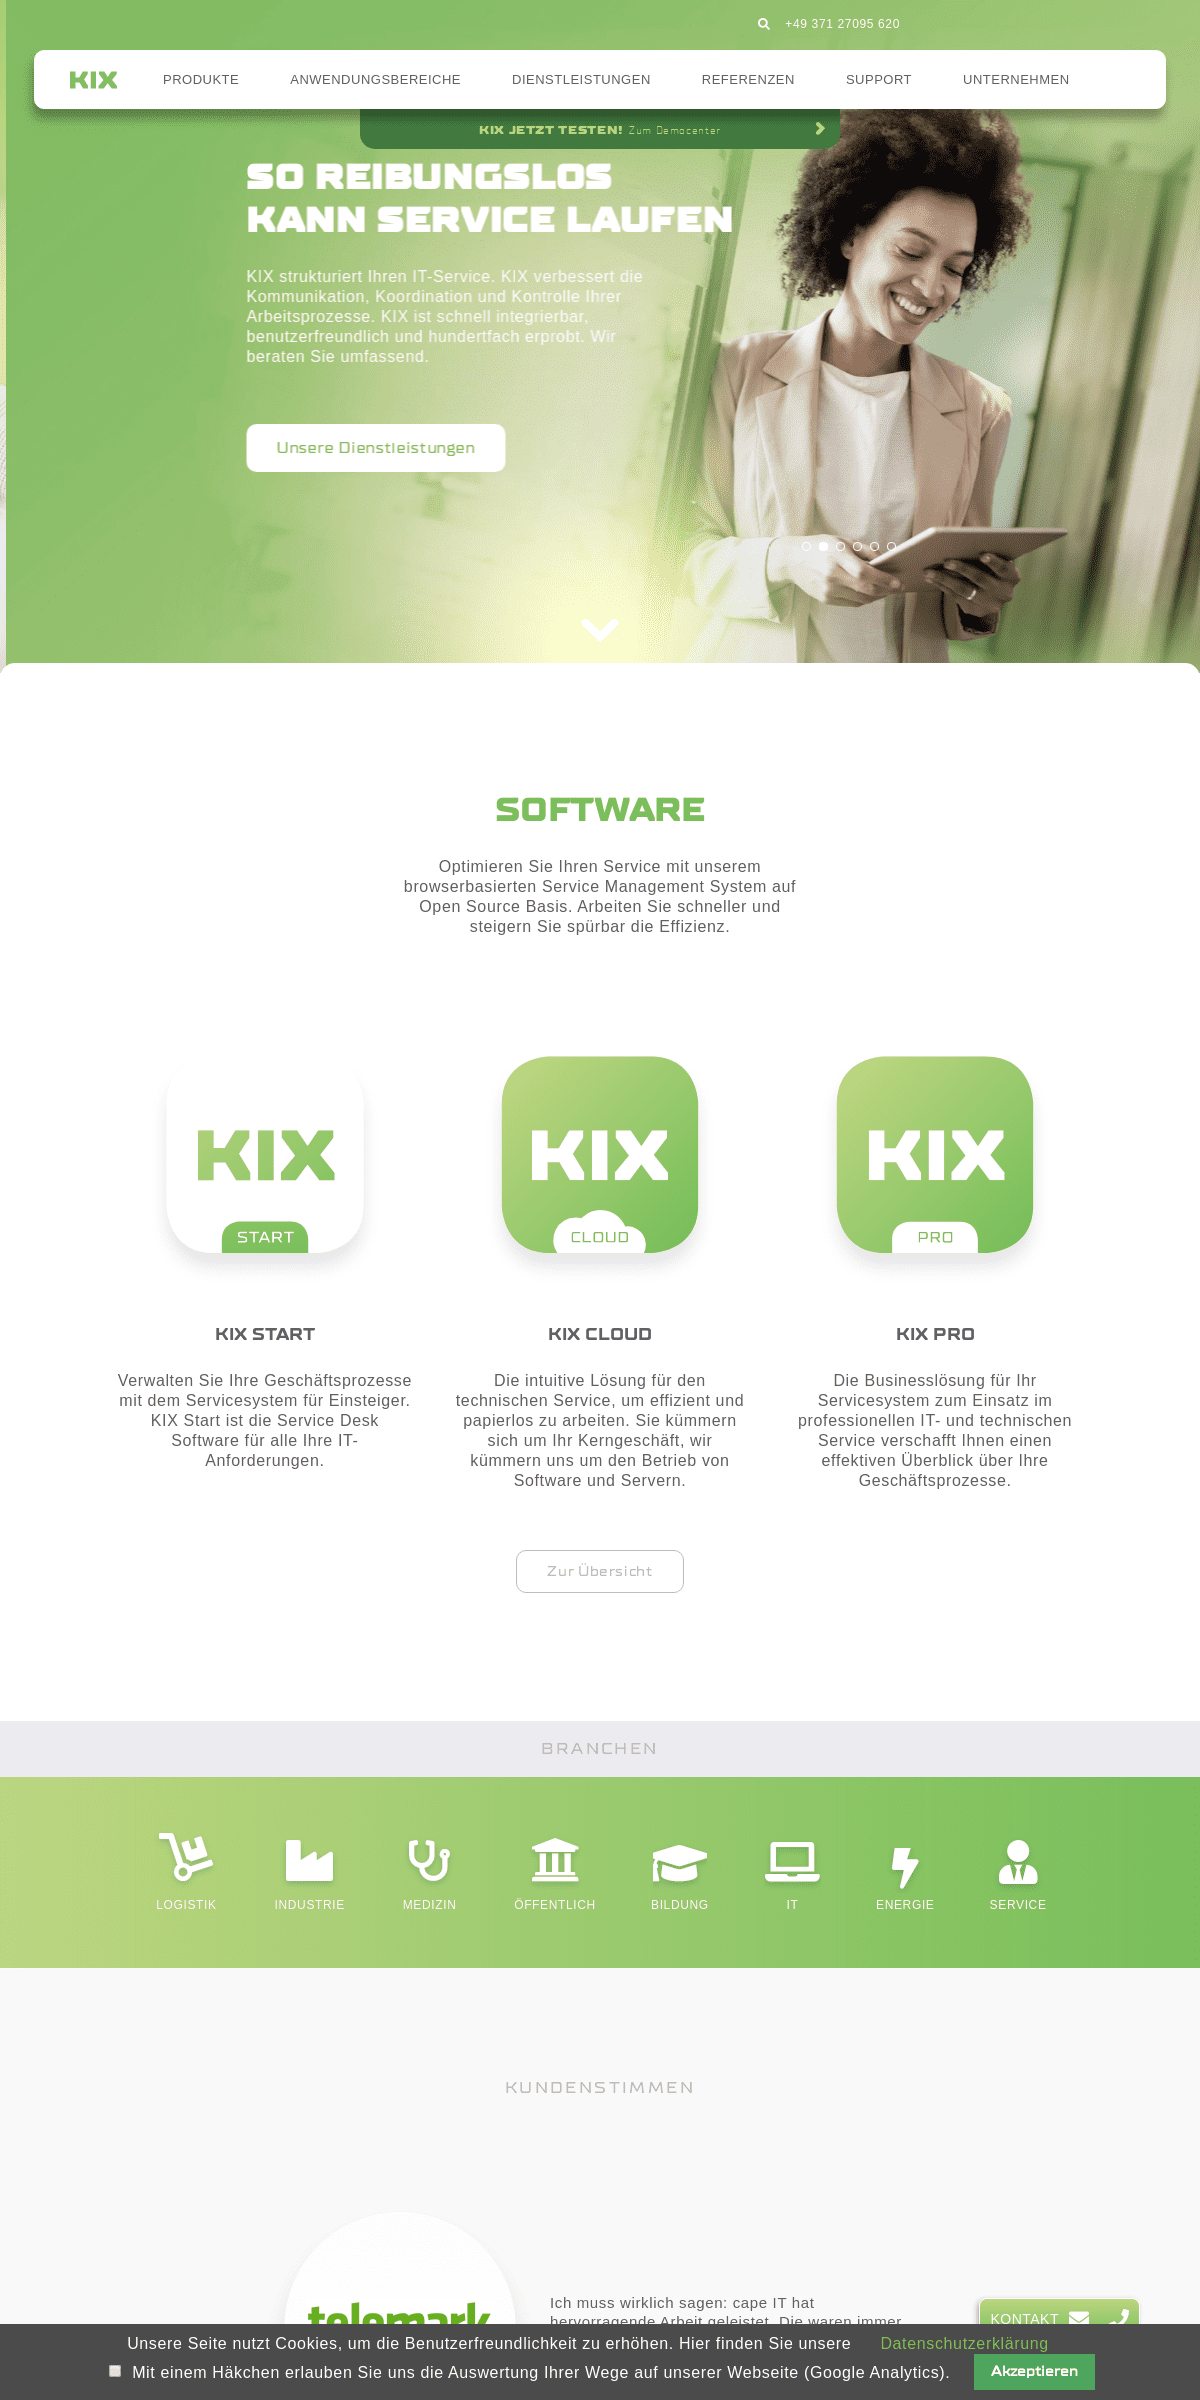 A complete backup of kixdesk.com